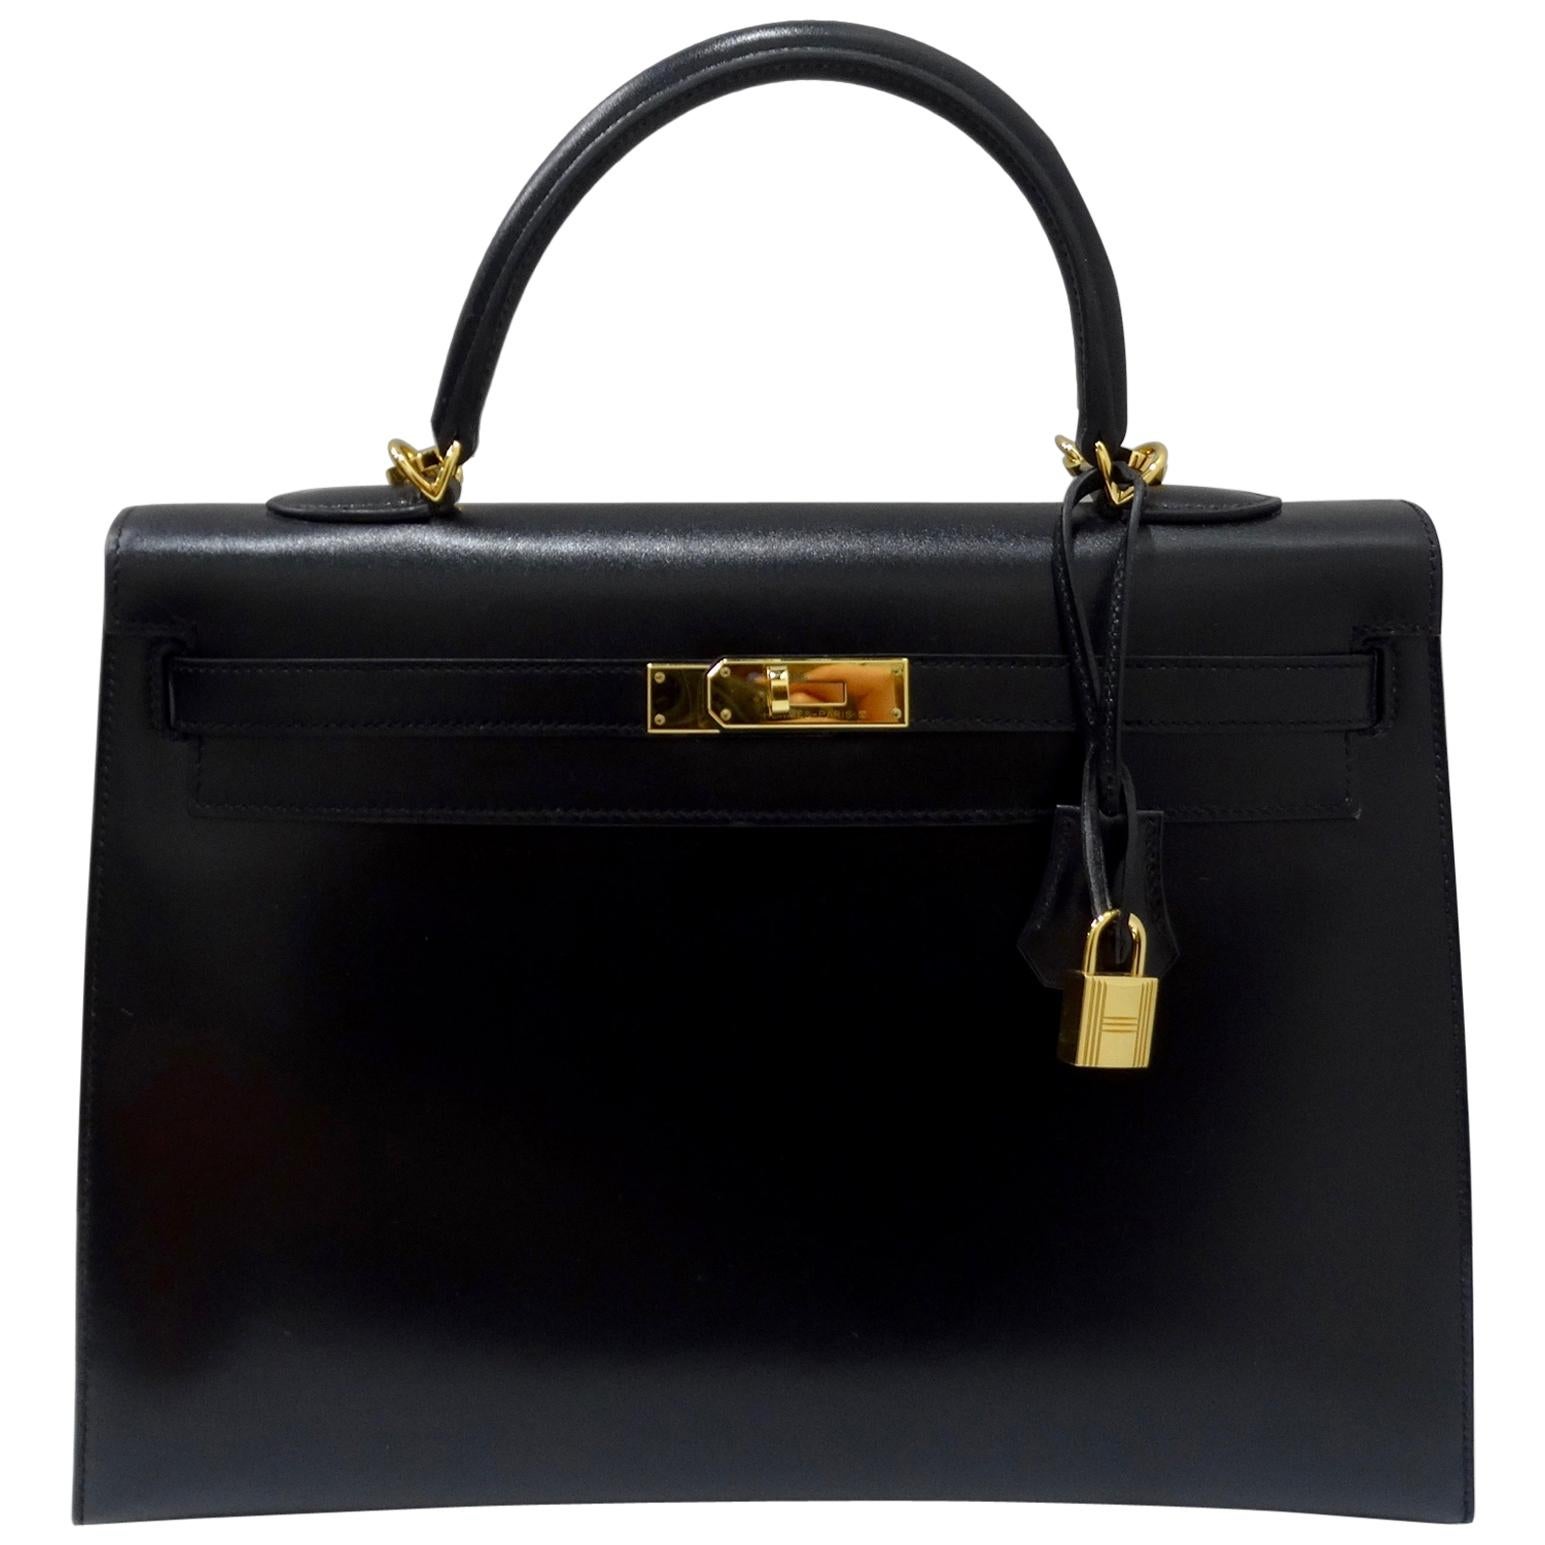 Hermès 2016 Kelly Sellier 35cm Black Box Leather 